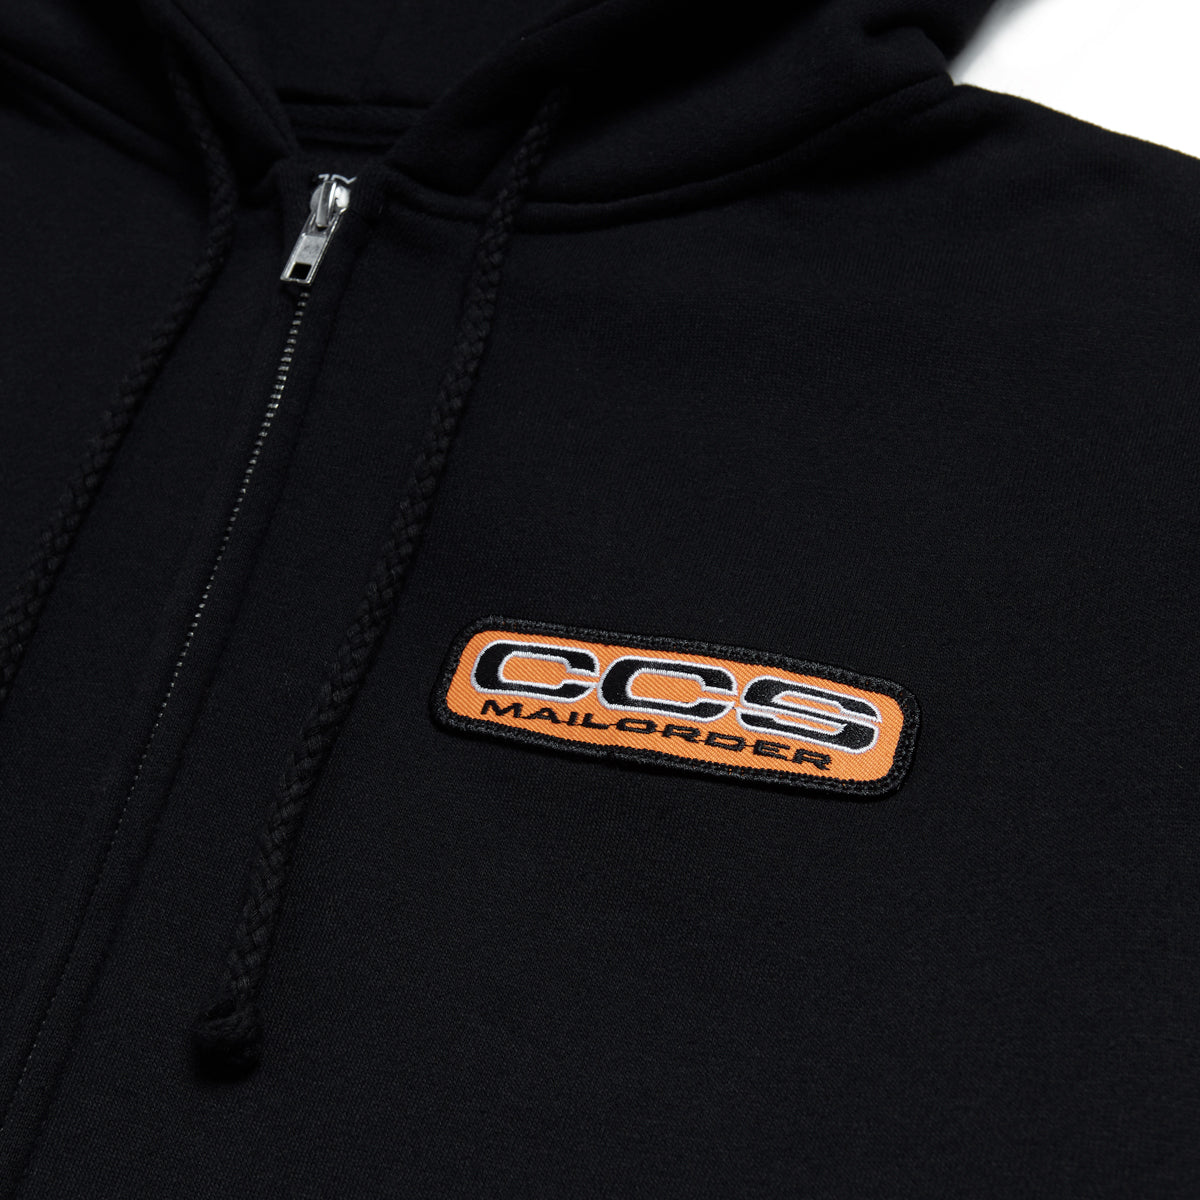 CCS Mailorder Patch Zip Hoodie - Black/Orange image 2